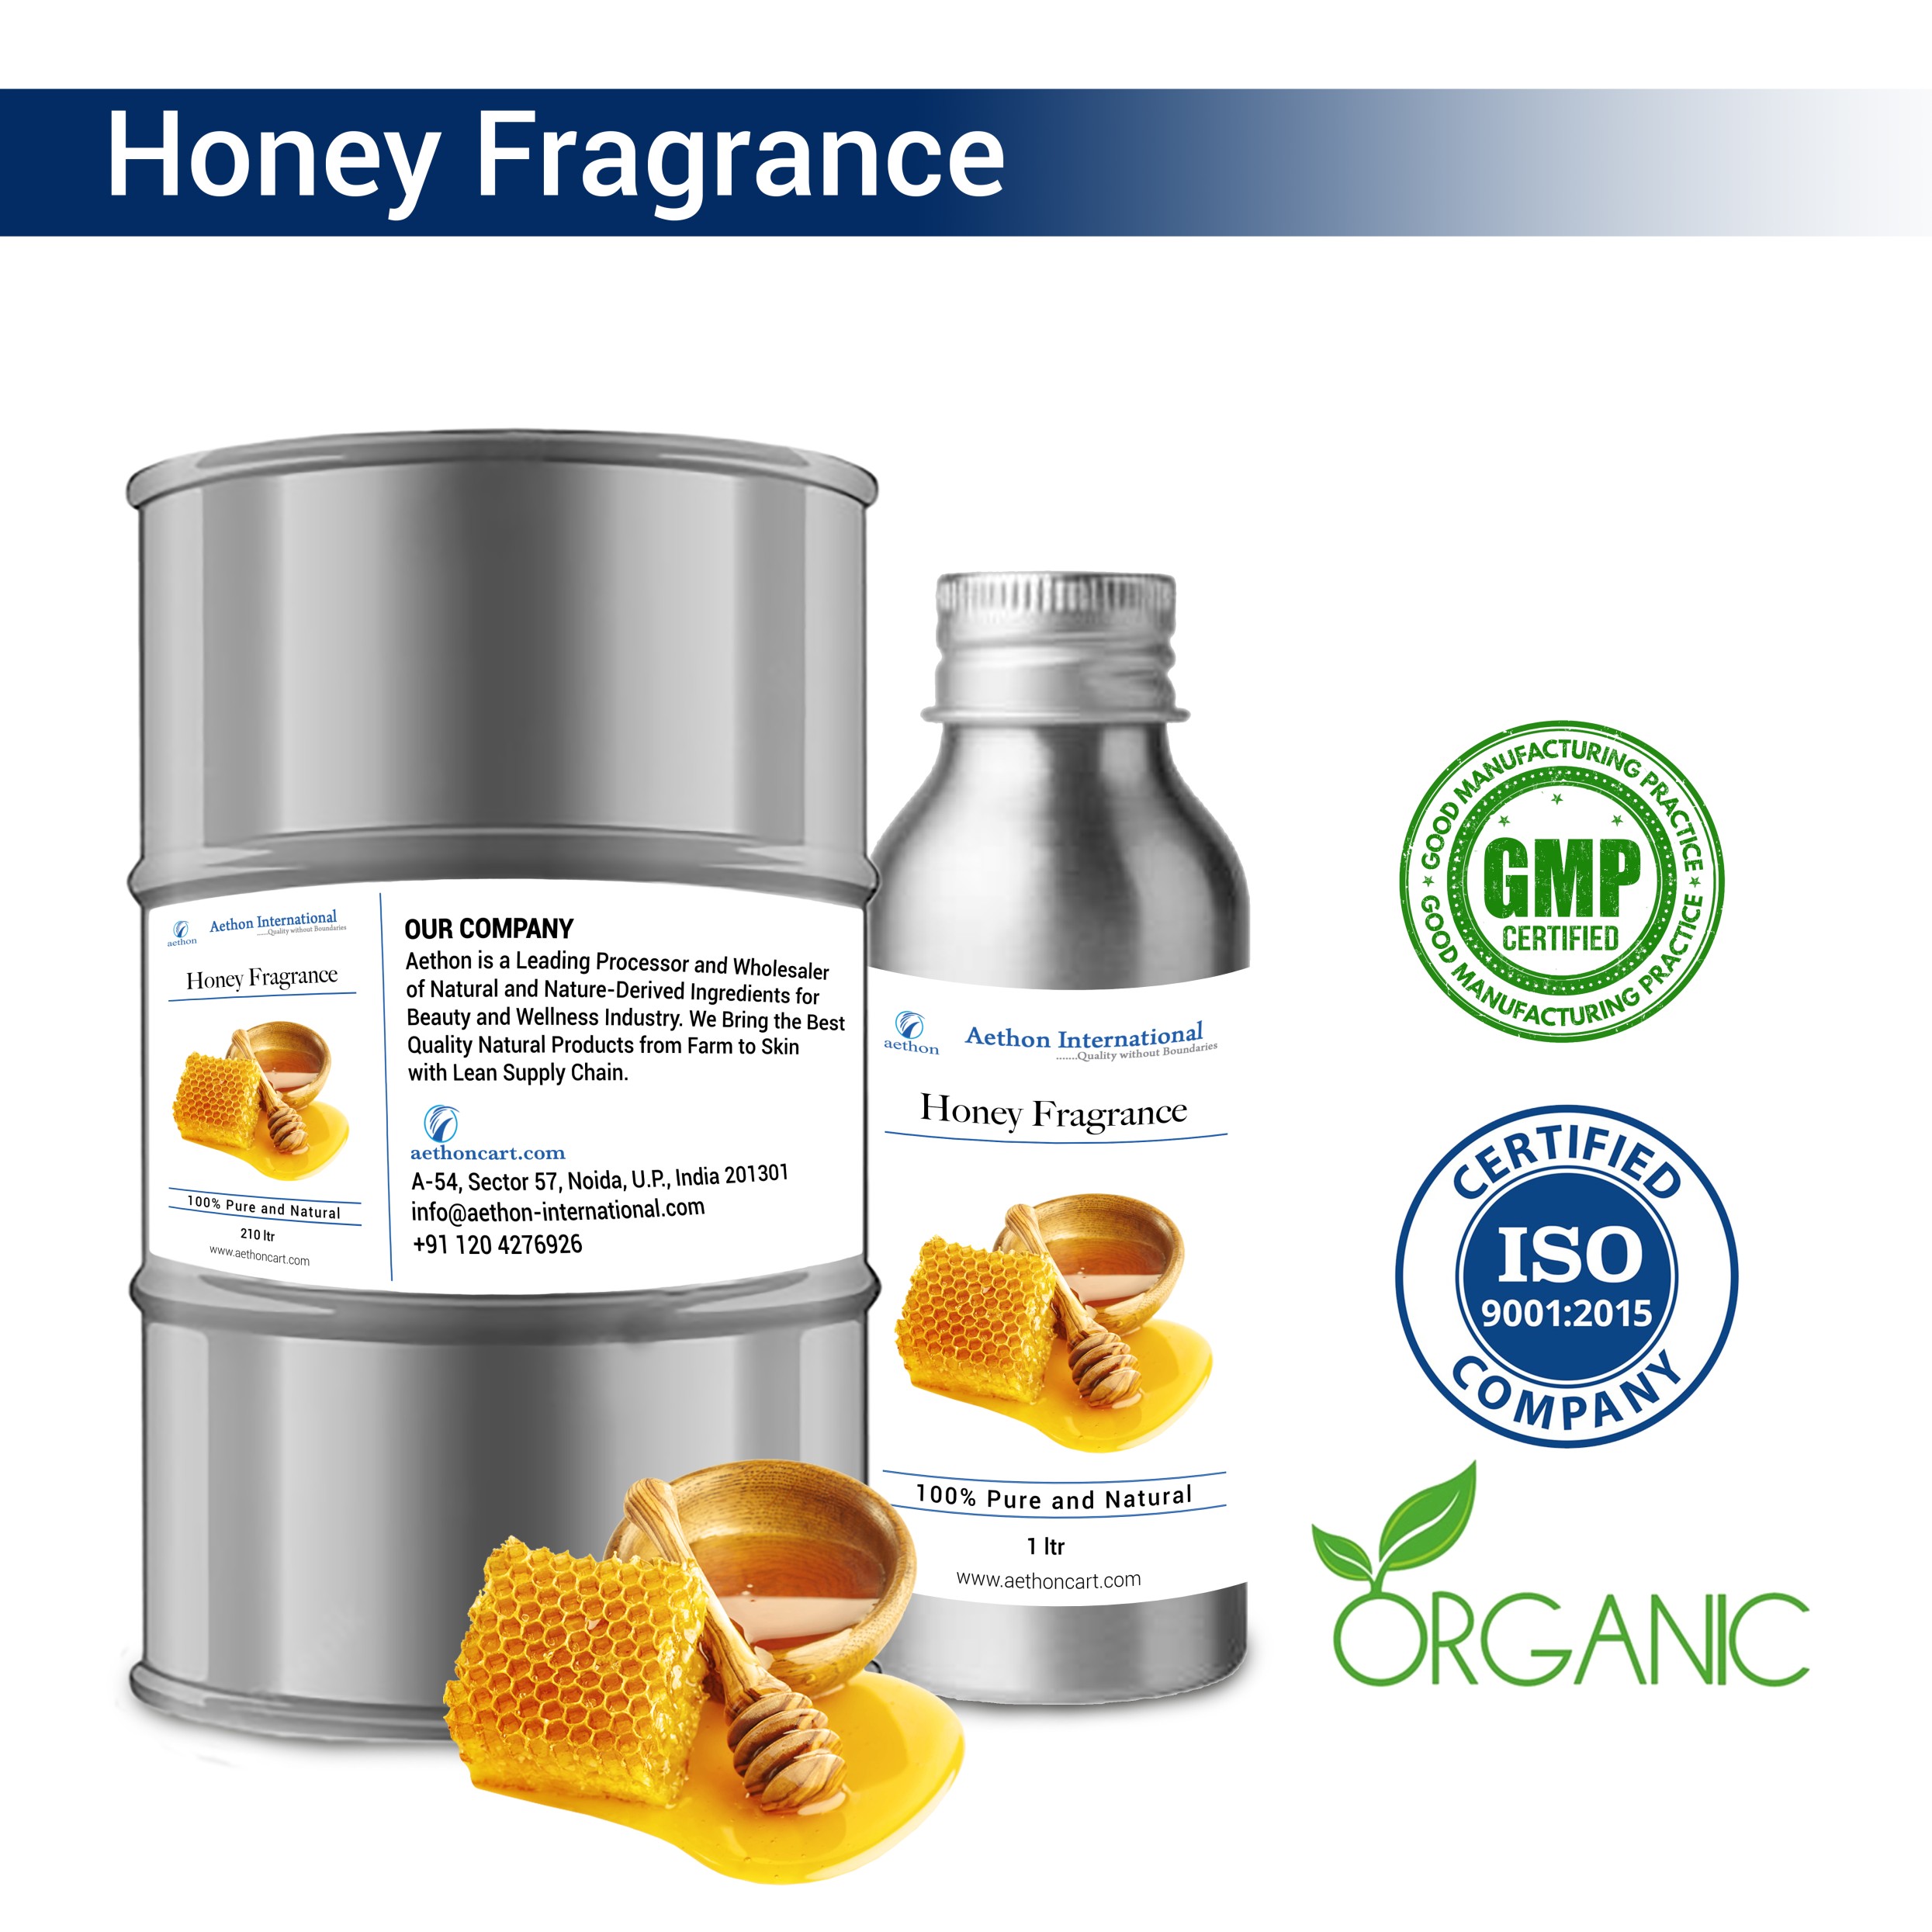 Honey Fragrances (WS)